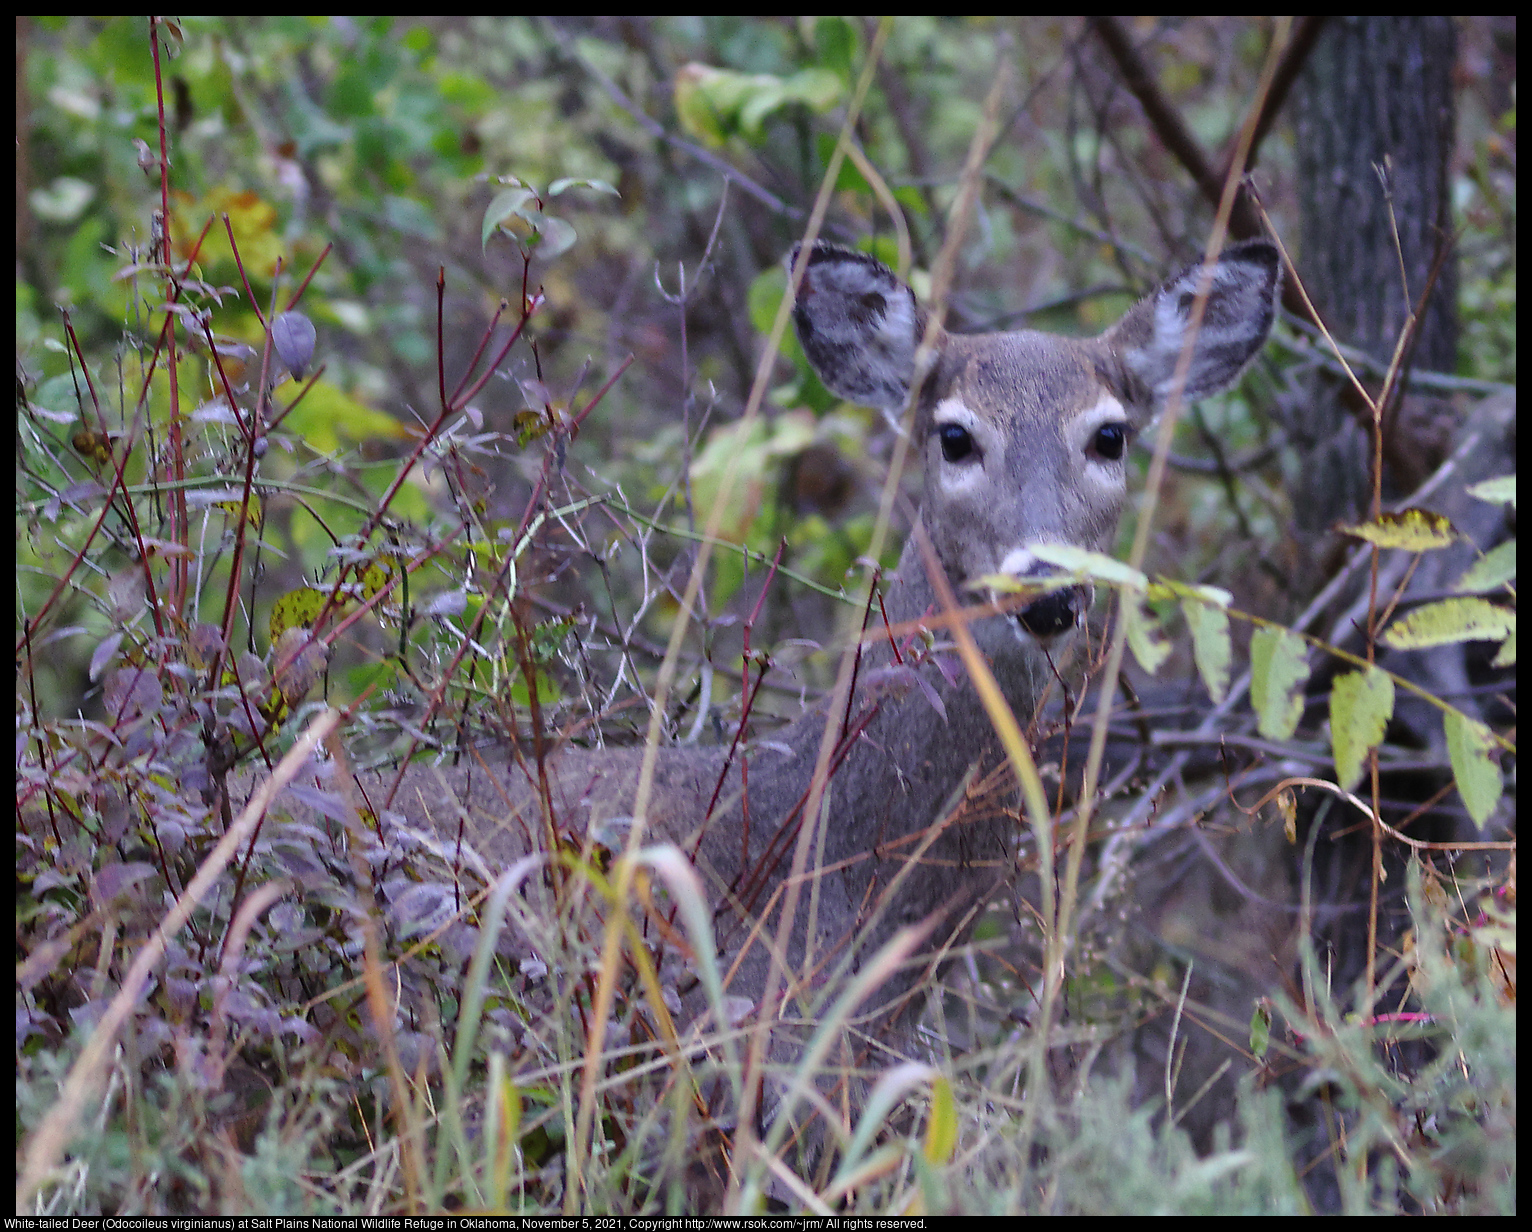 White-tailed Deer (Odocoileus virginianus) at Salt Plains National Wildlife Refuge in Oklahoma, November 5, 2021